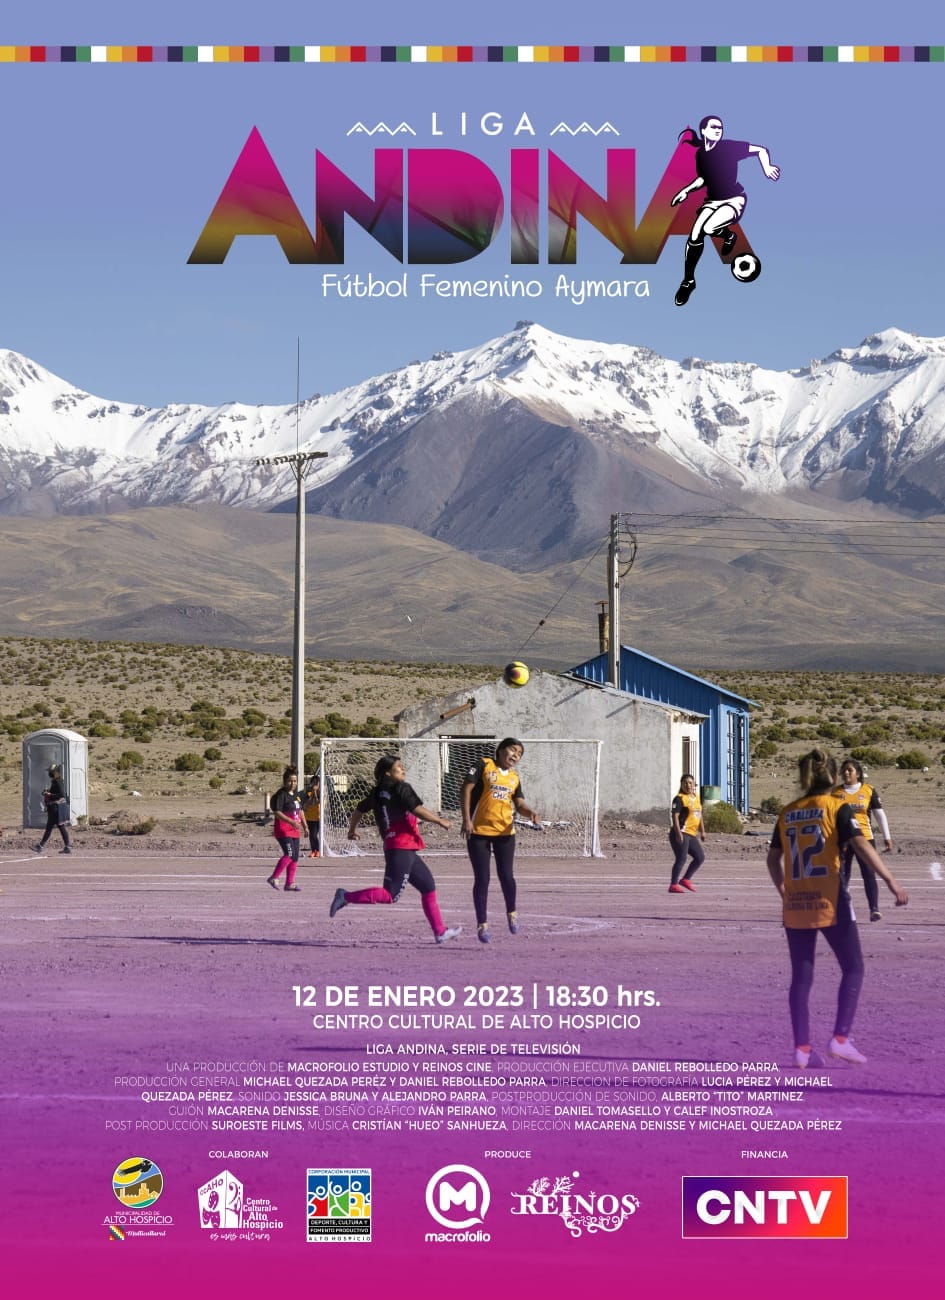 La liga andina de fútbol femenino aymara